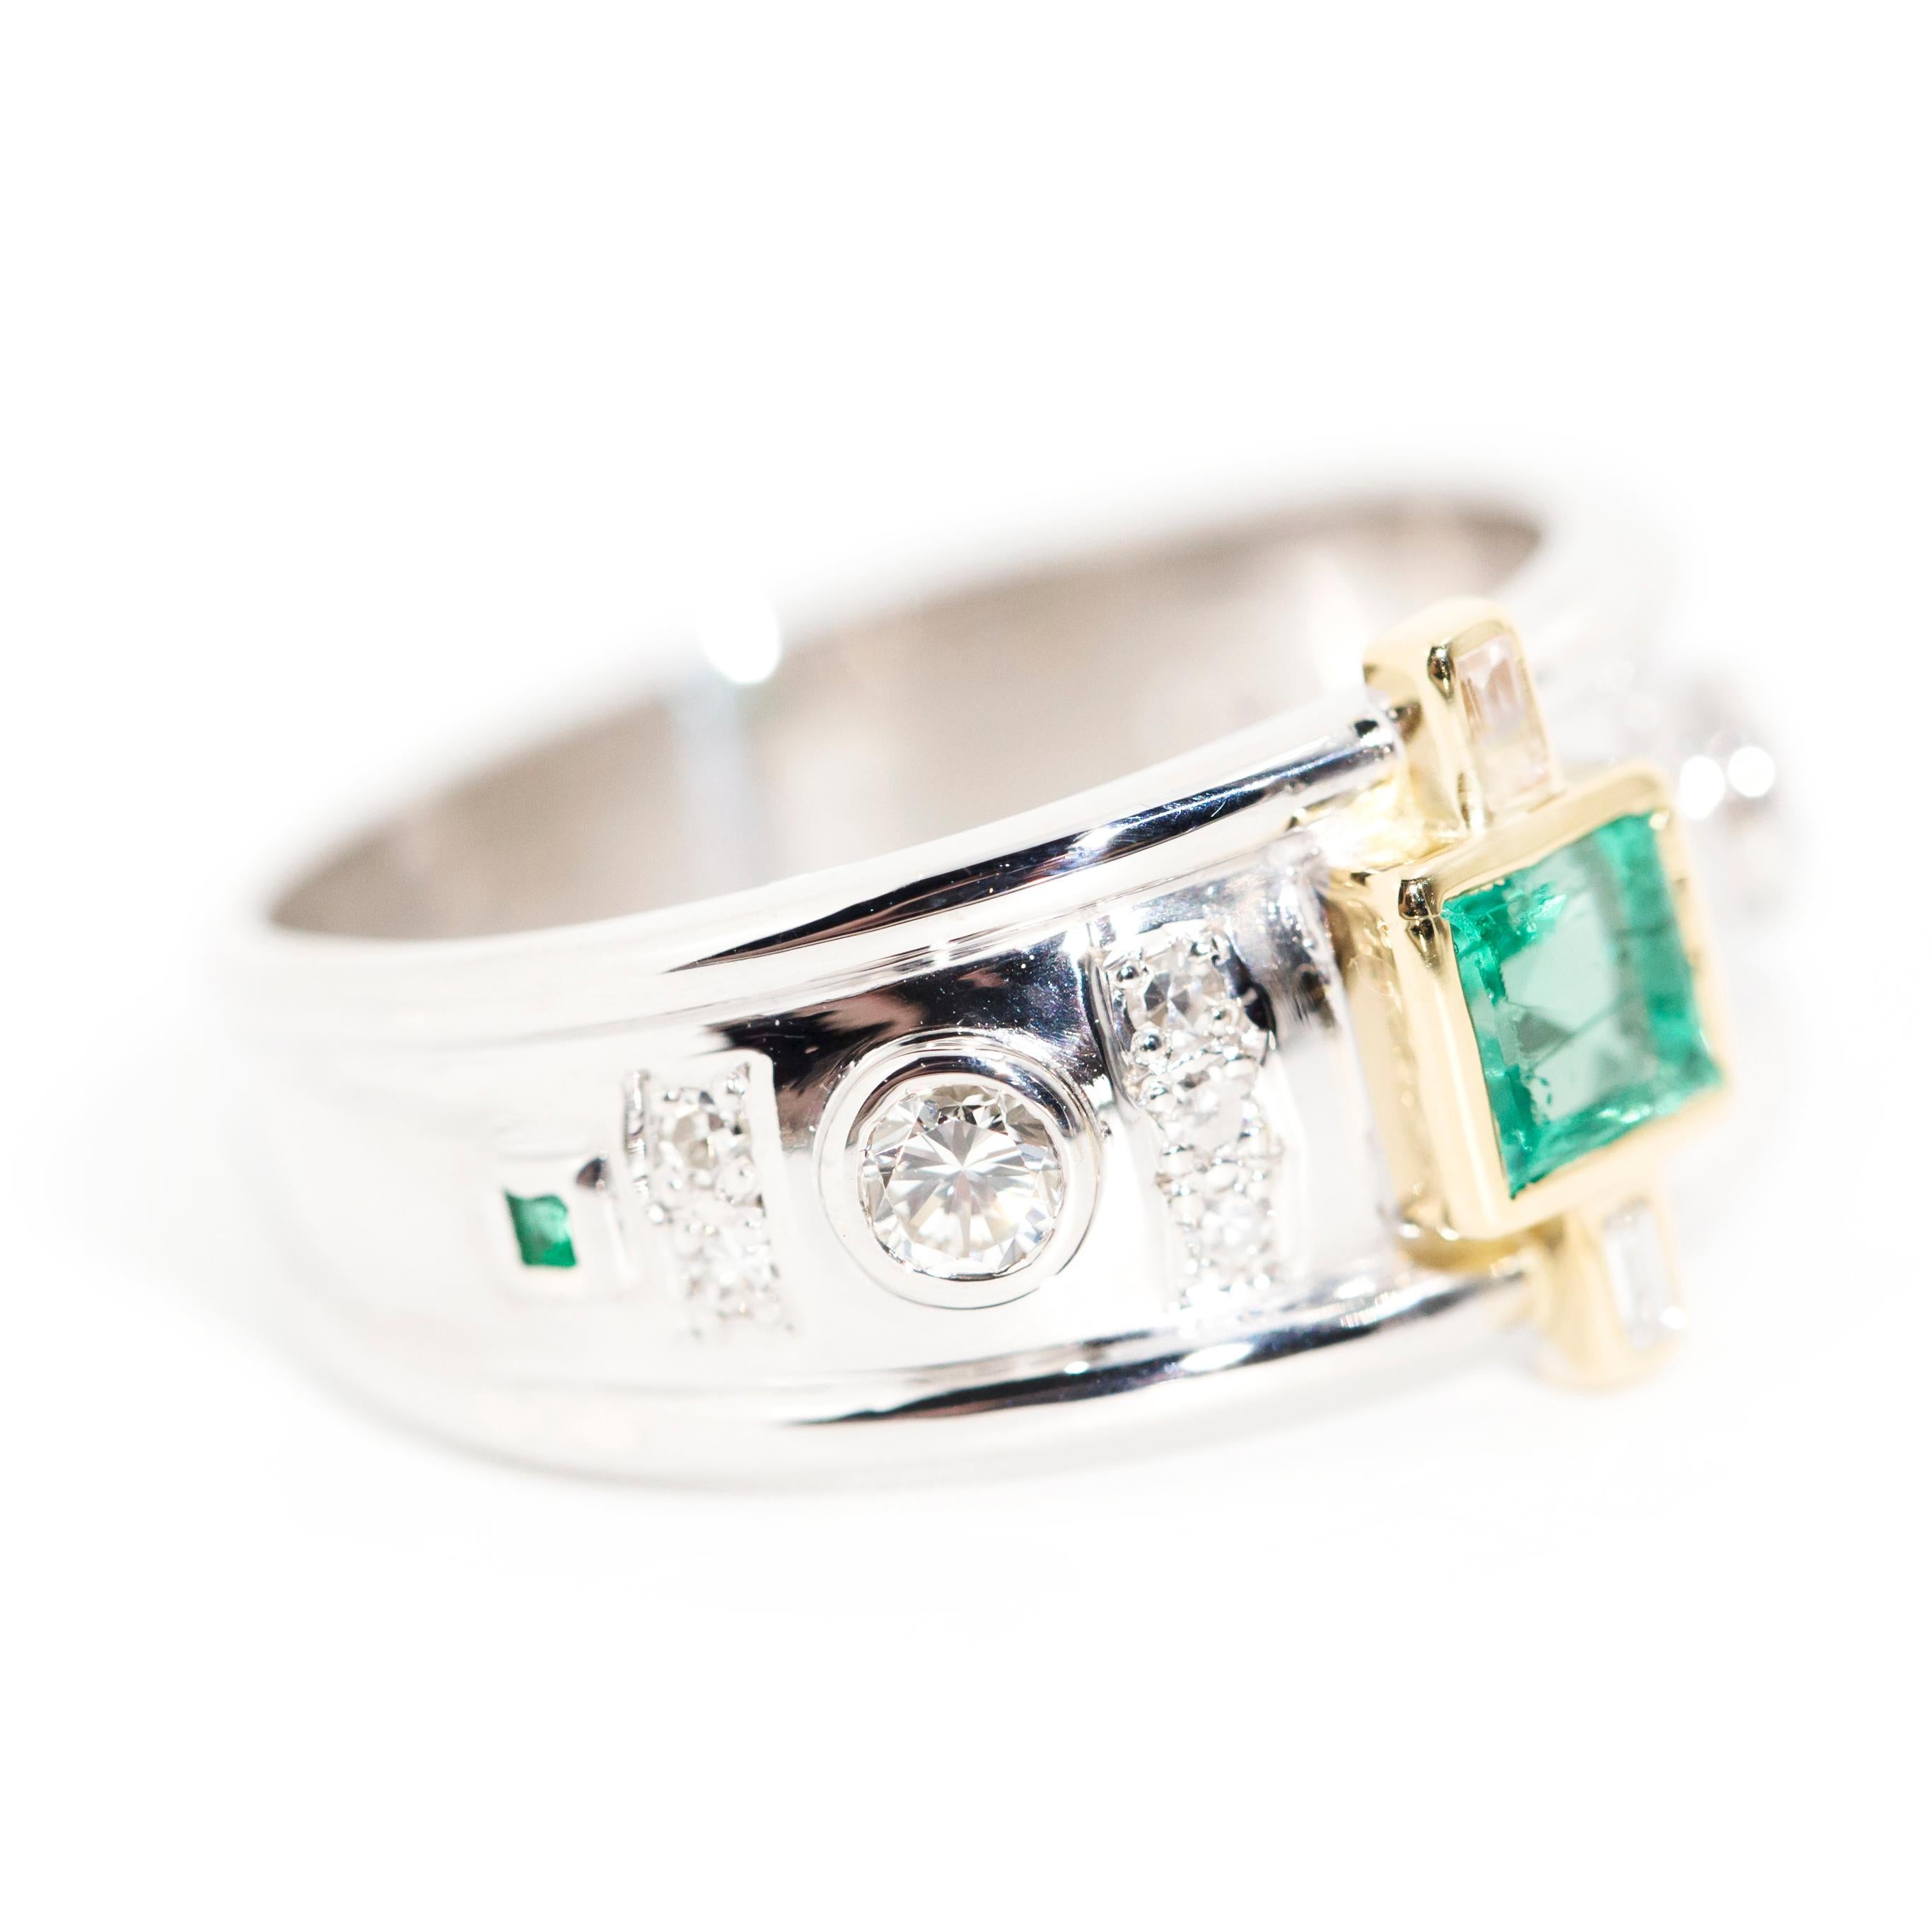 Square Cut 0.45 Carat Green Natural Emerald Diamond Vintage Men's Ring in 9 Carat Gold